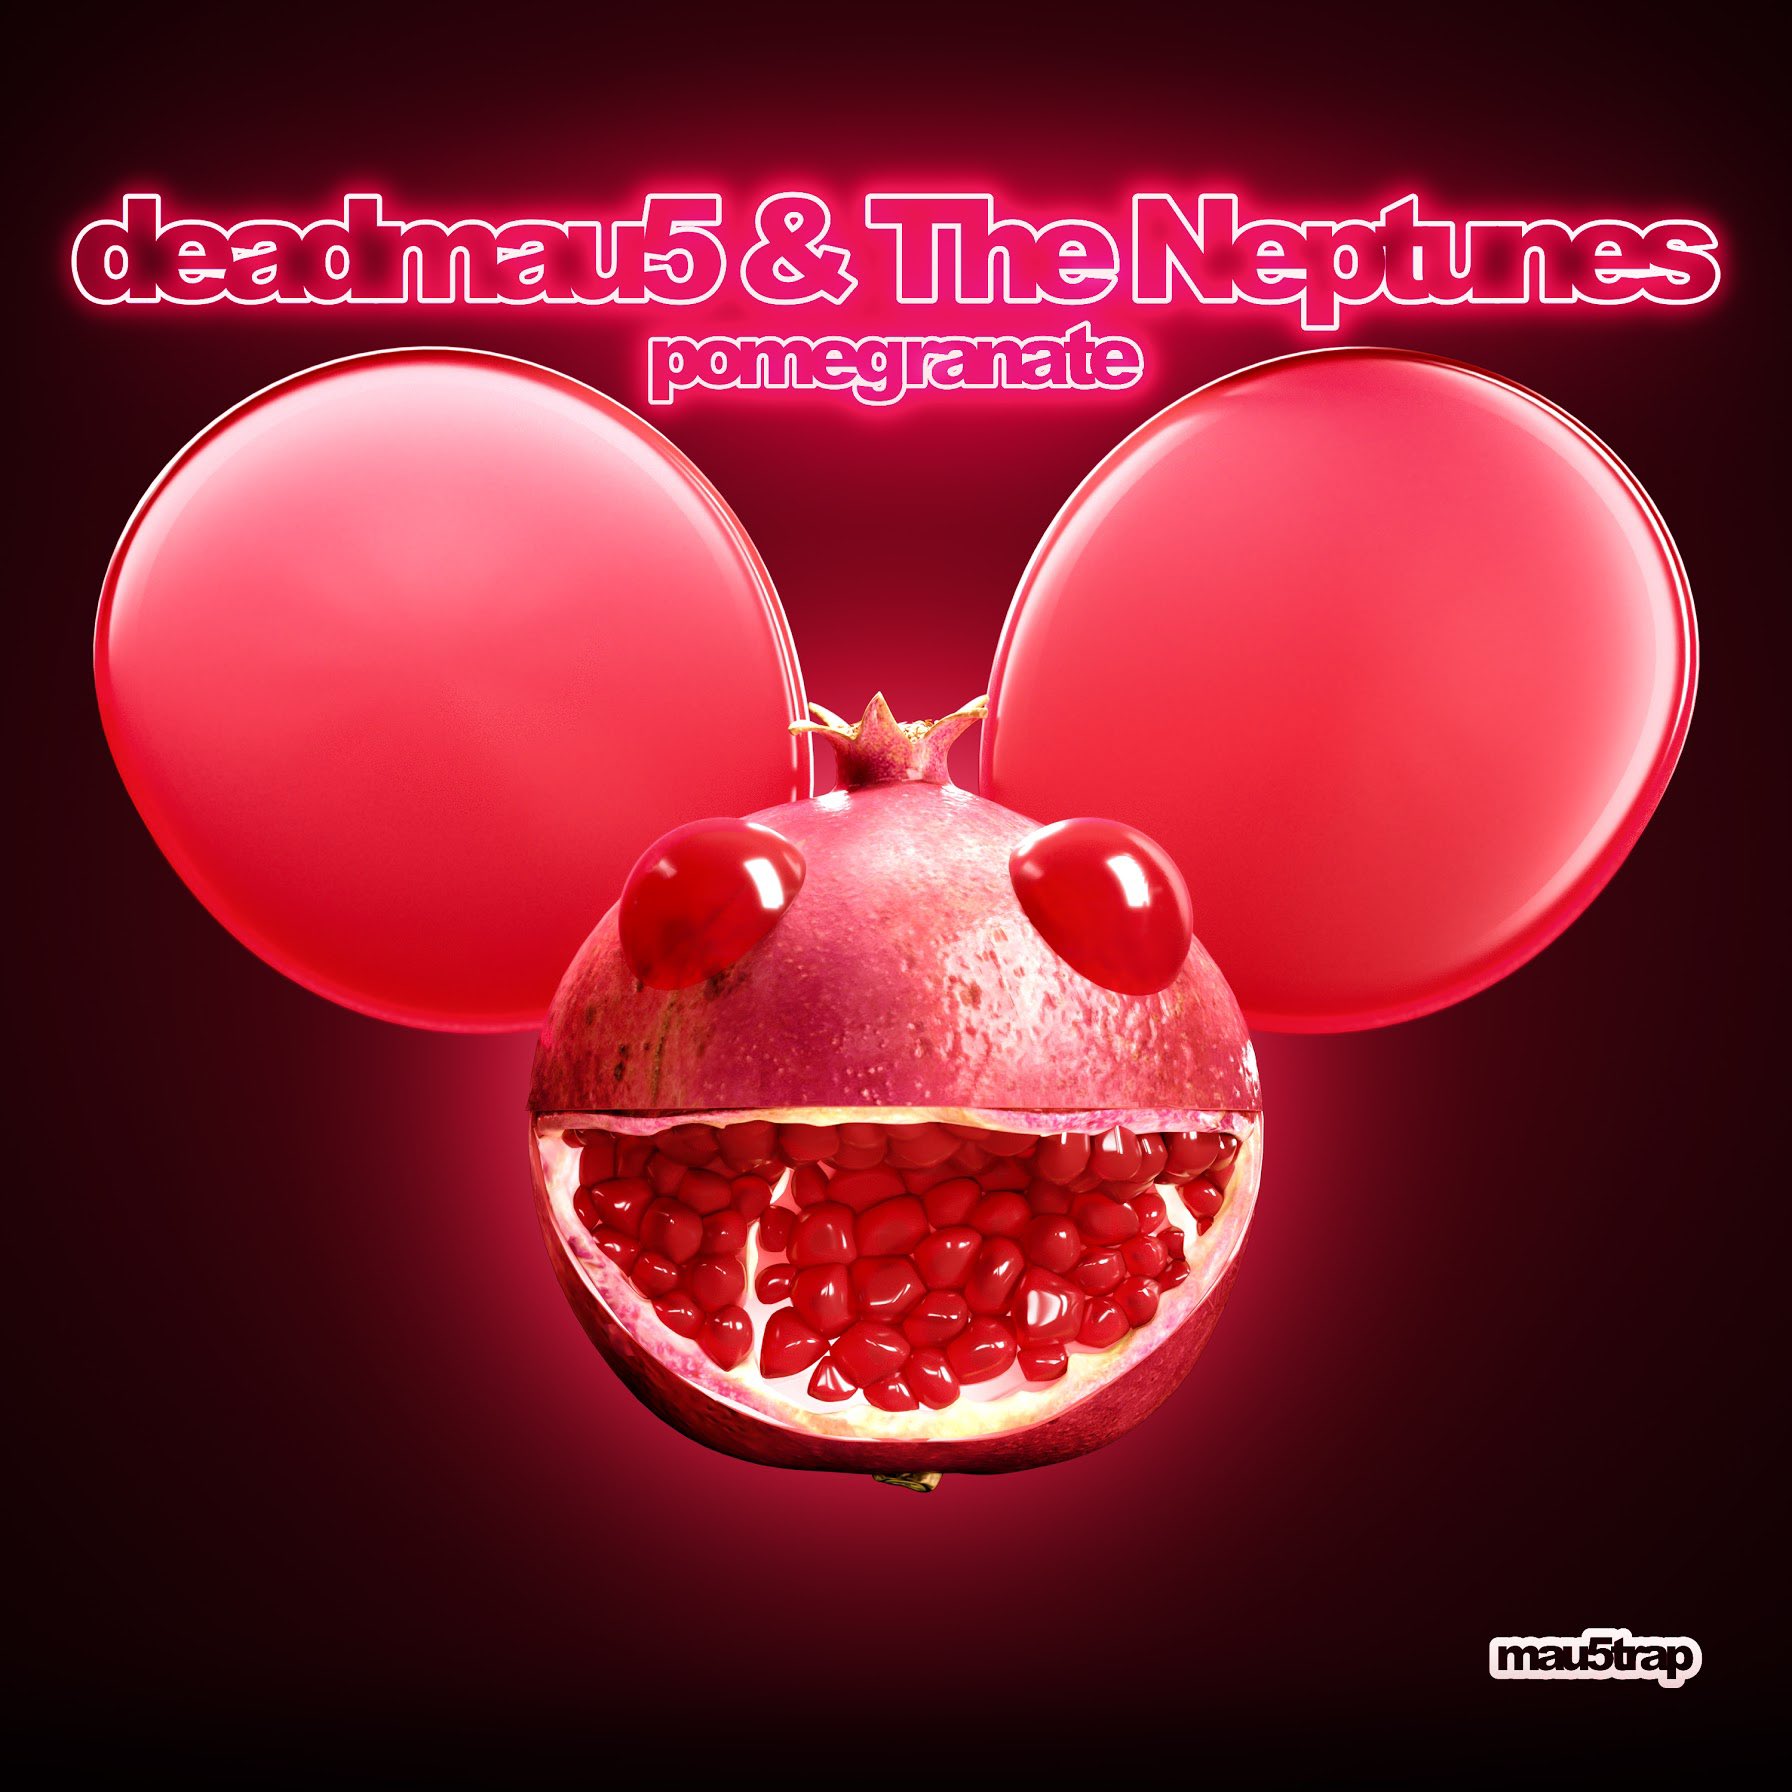 deadmau5-pomegranate-art